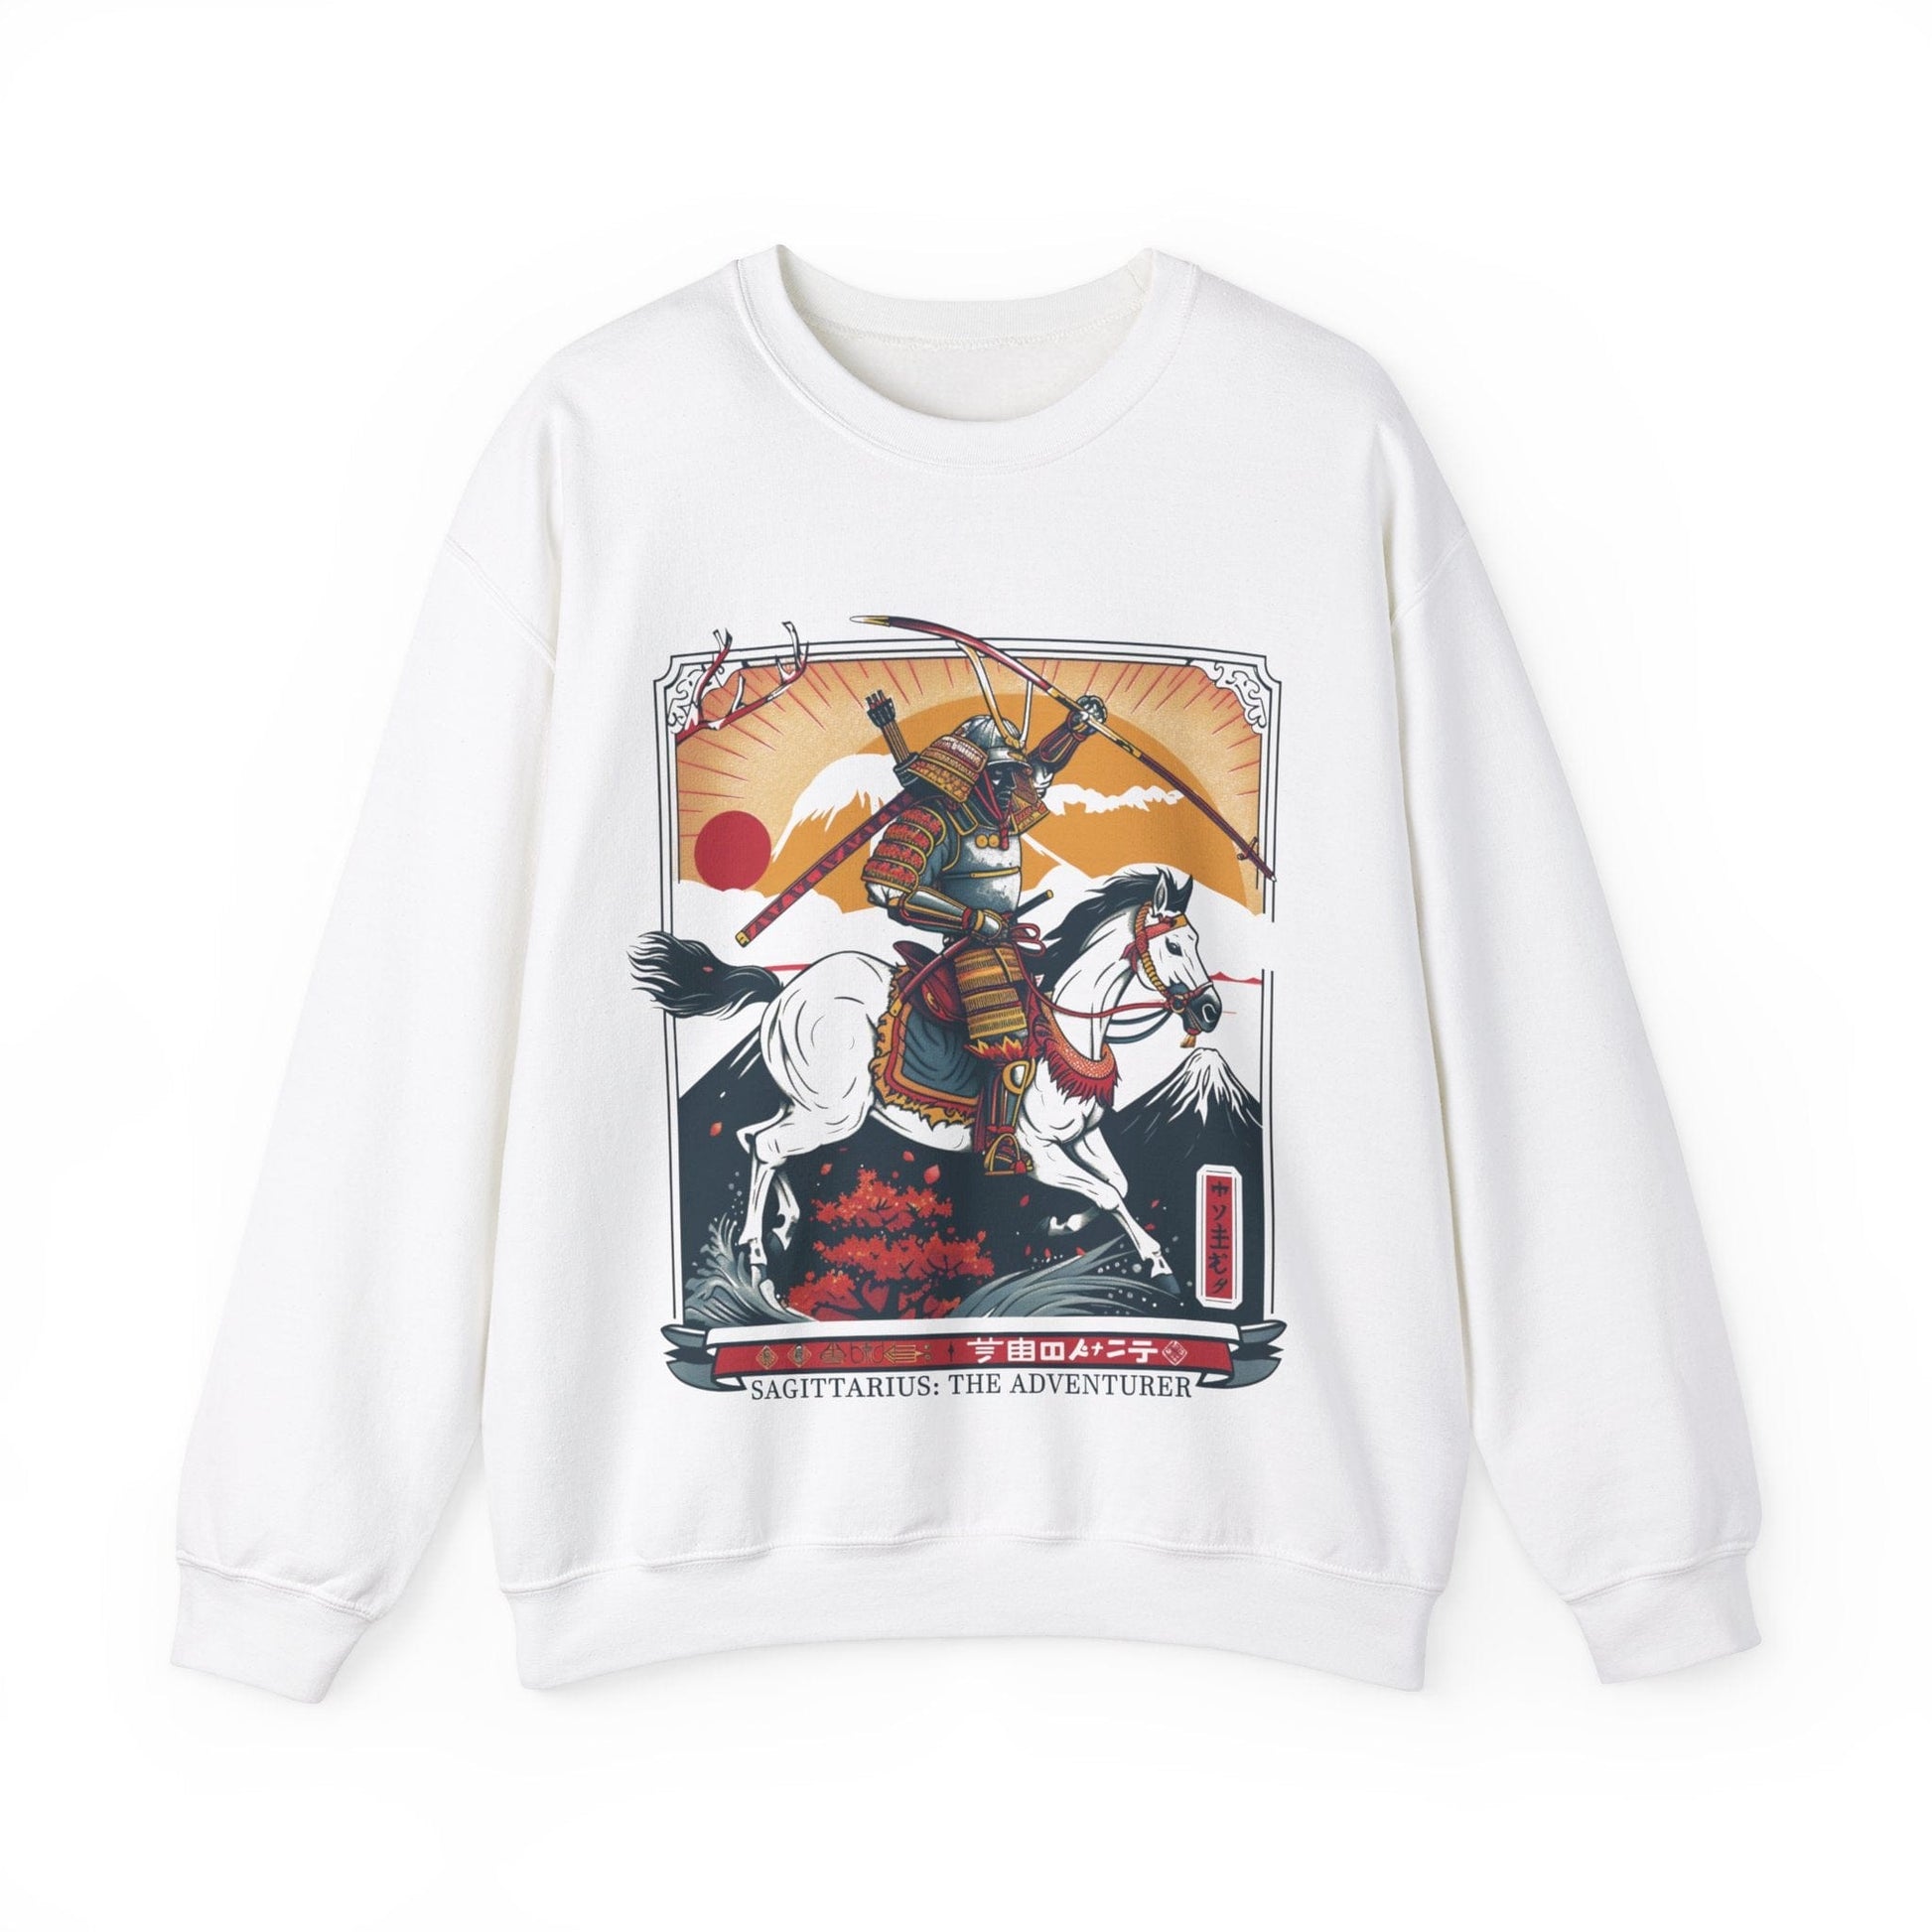 Sweatshirt S / White Shogun Quest Sagittarius Sweater: The Warrior's Path